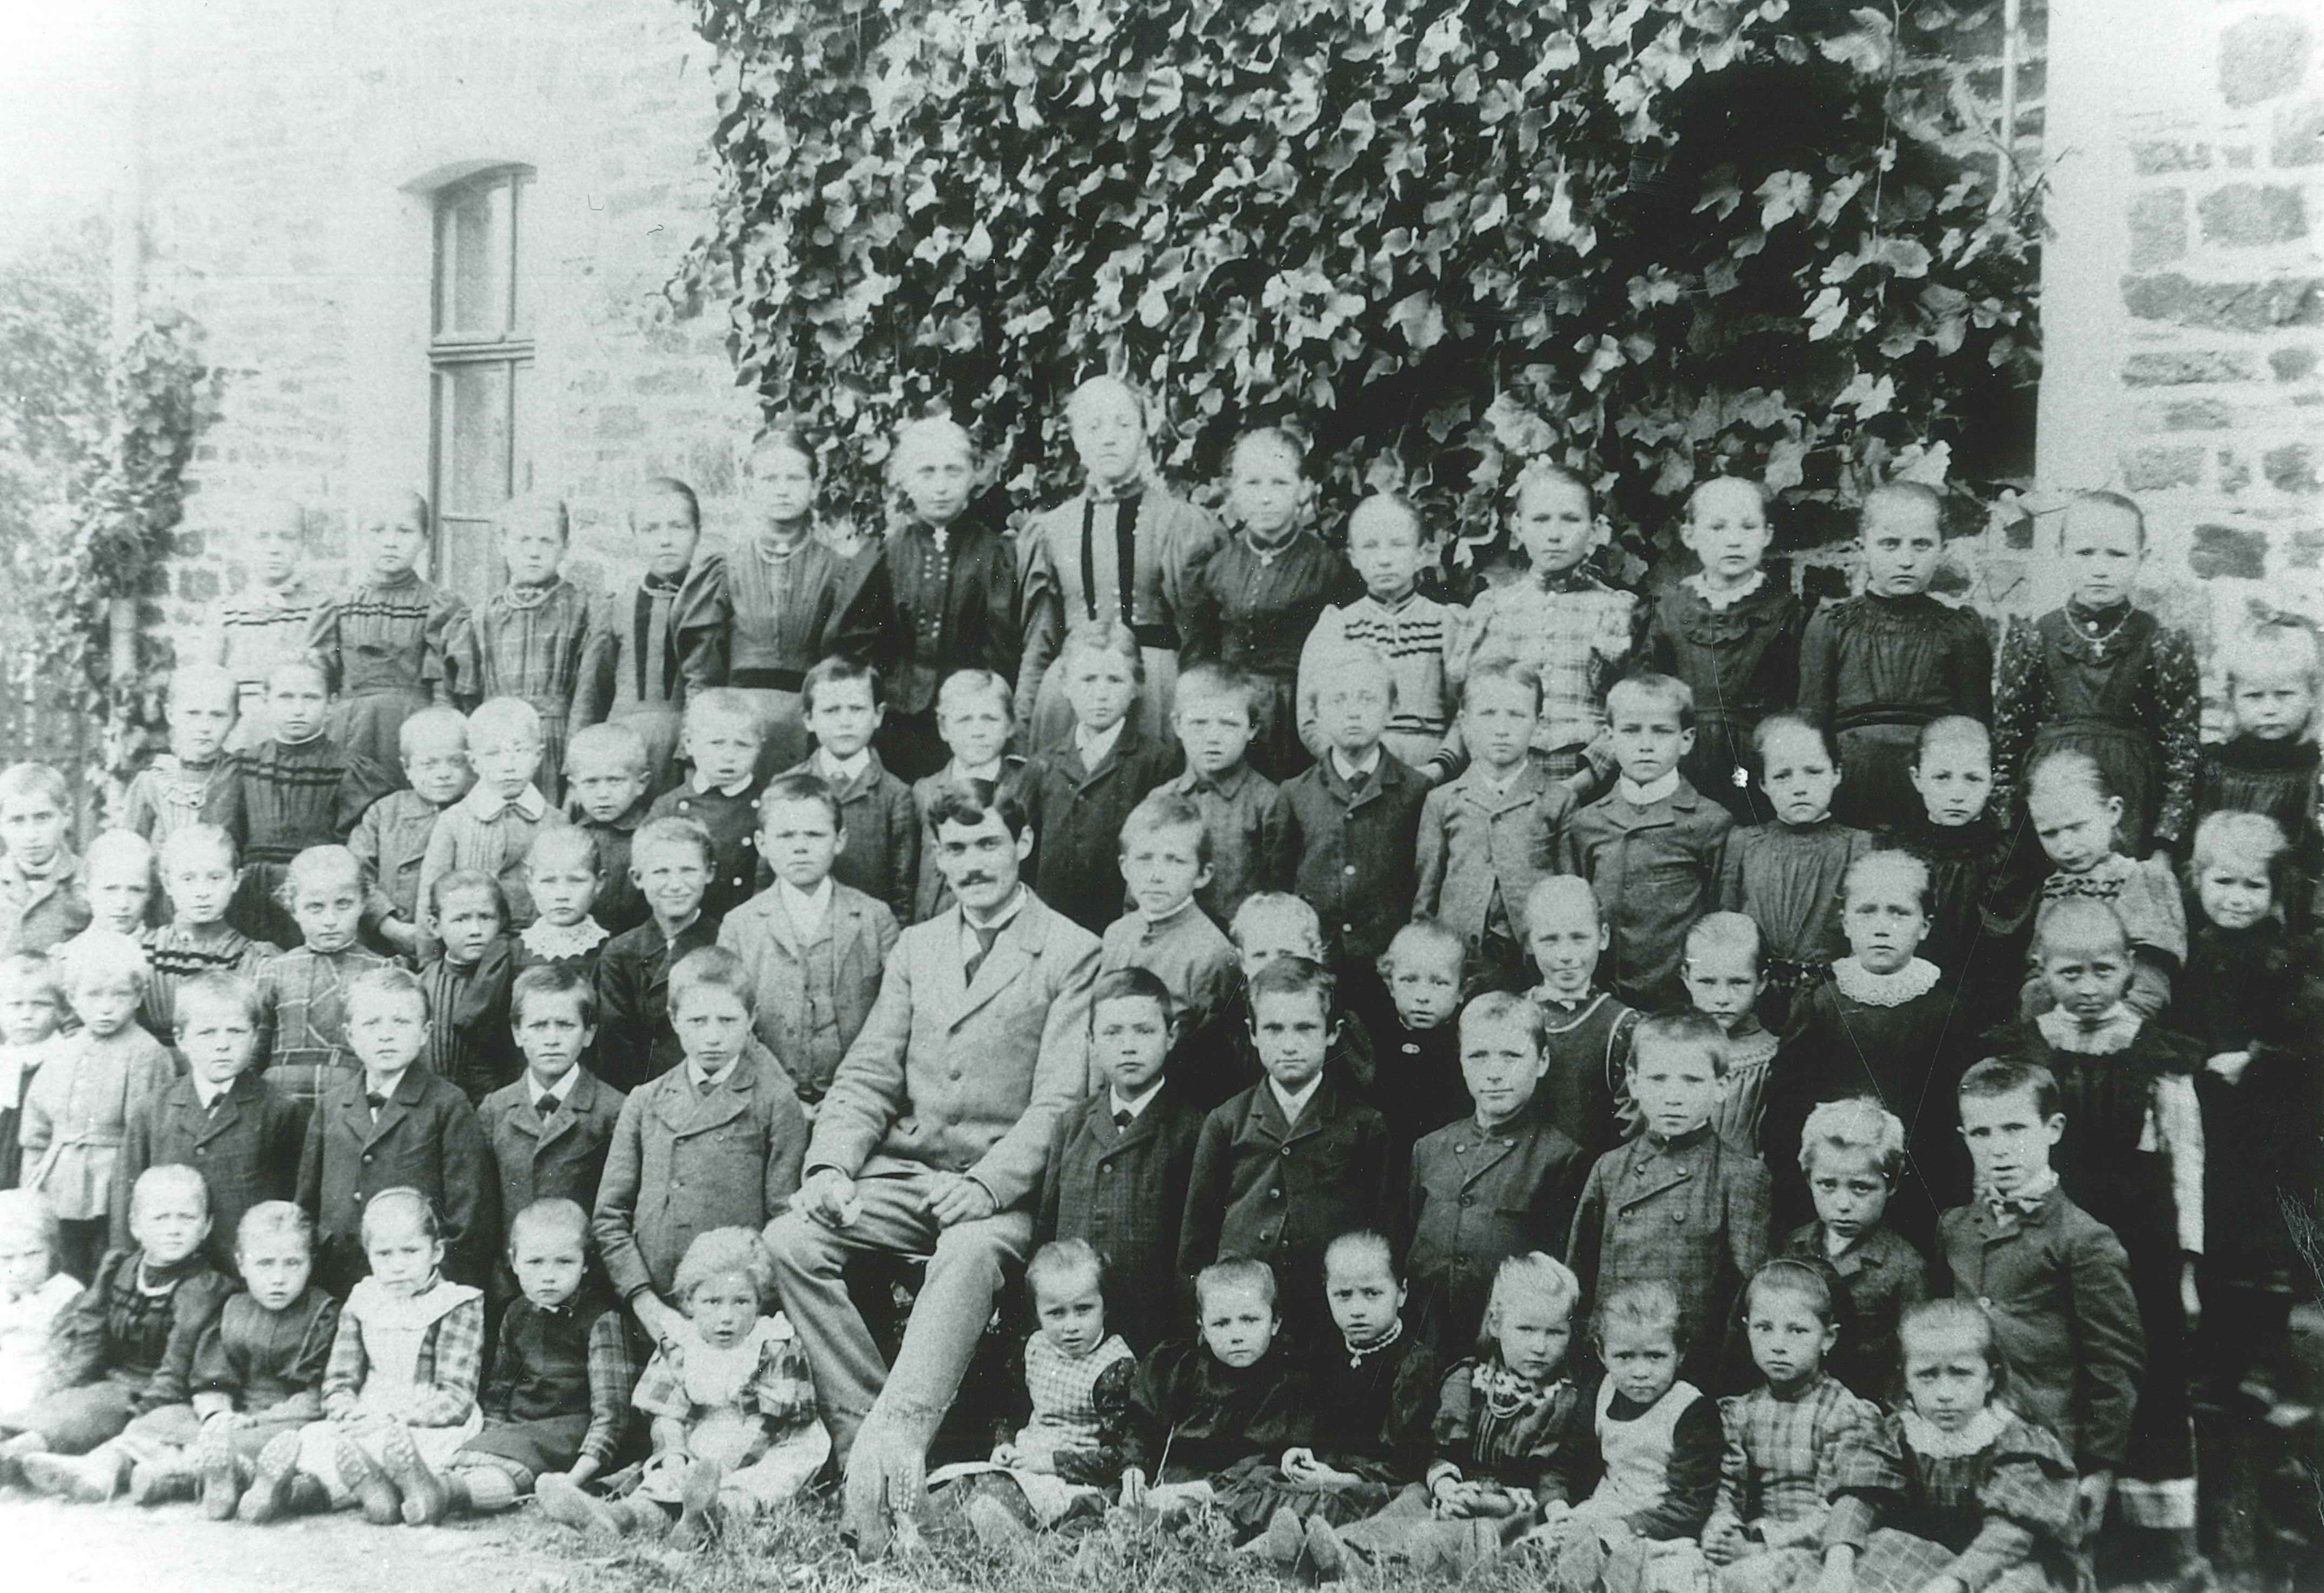 Klassenfoto, katholische Schule "Schönblick", Bendorf-Stromberg, 1890er Jahre (REM CC BY-NC-SA)